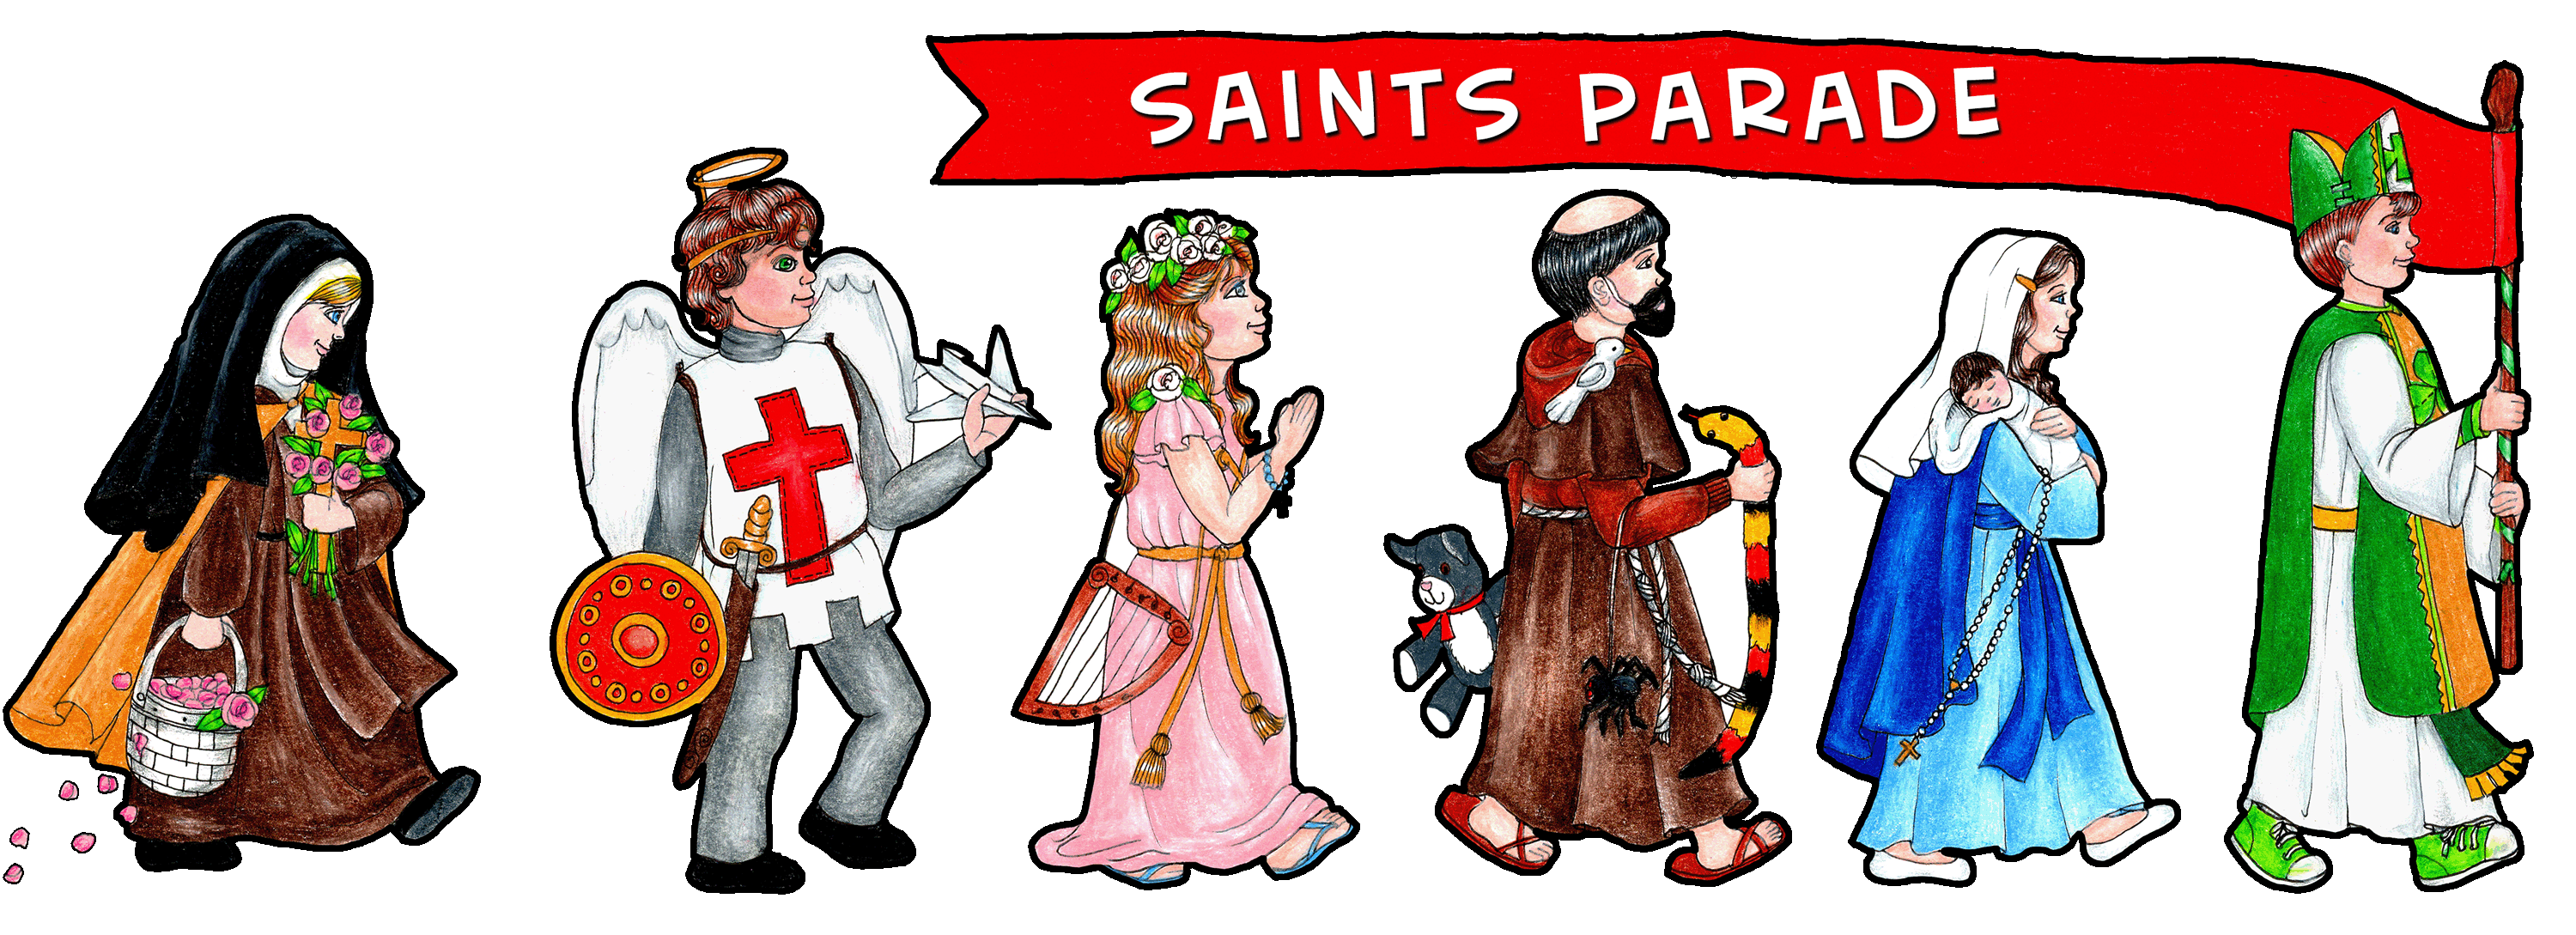 Saints Parade Bulletin Board Set